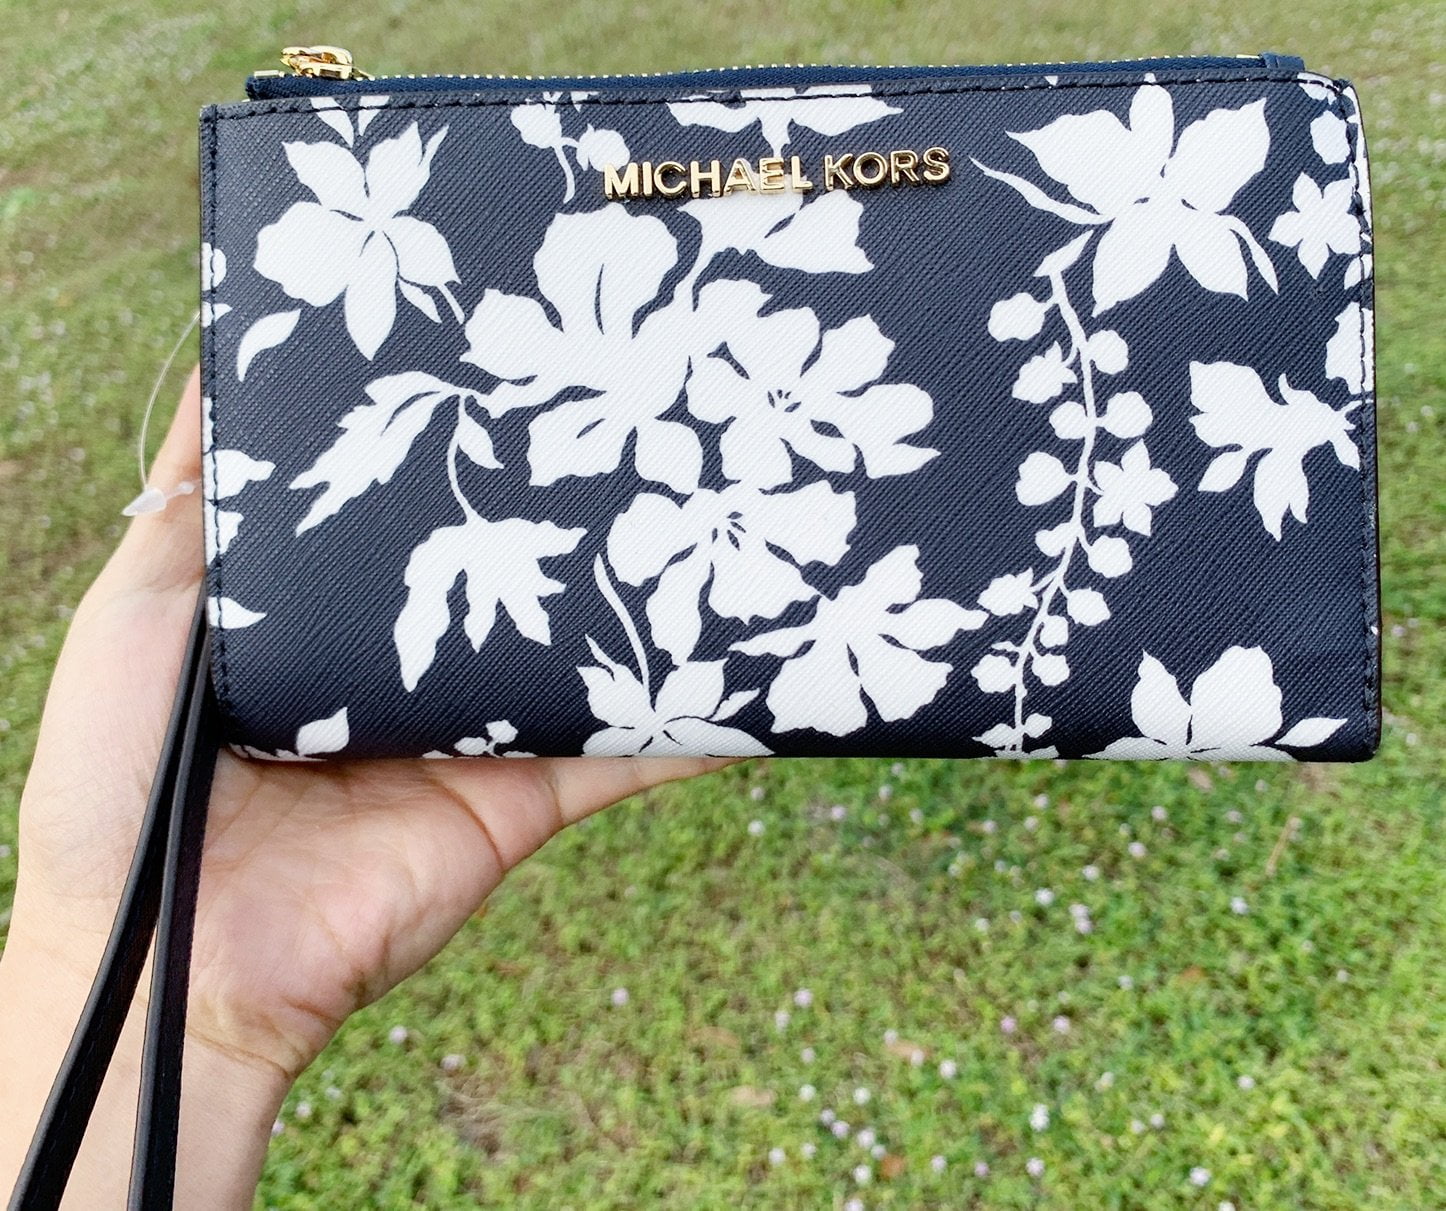 michael kors flower wallet